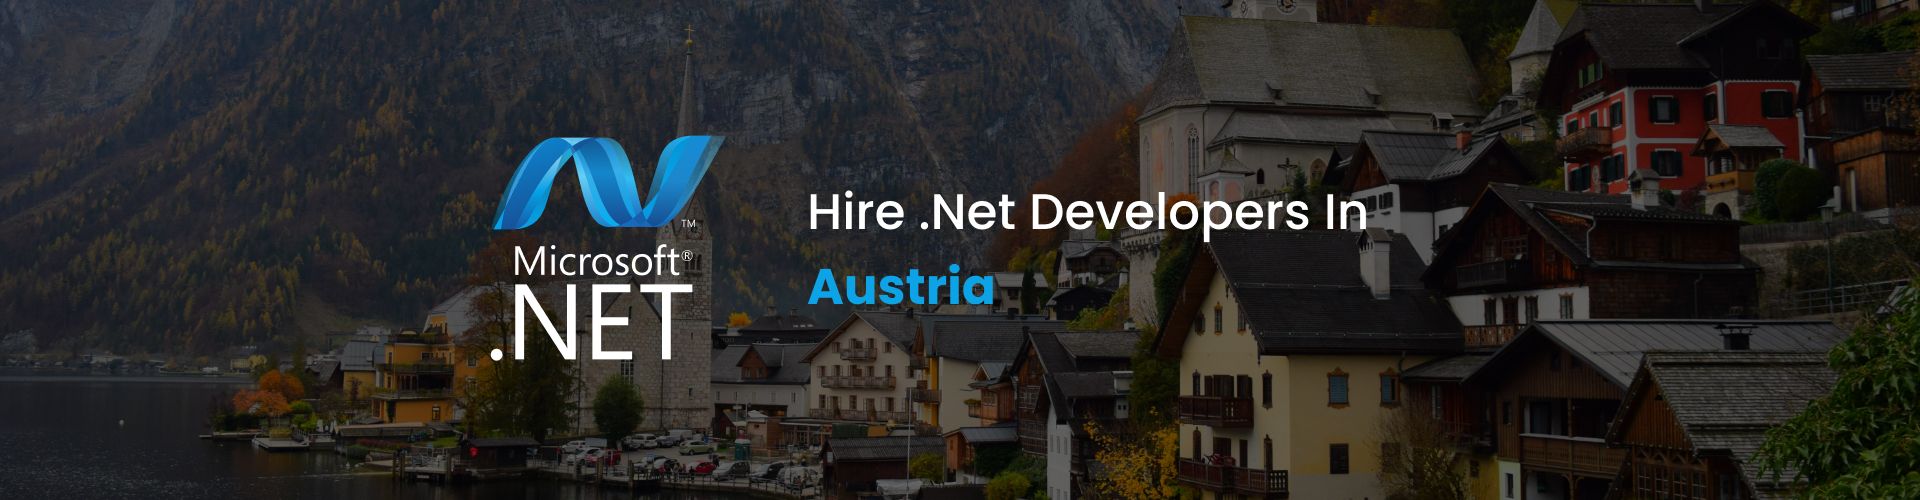 hire .net developers in austria